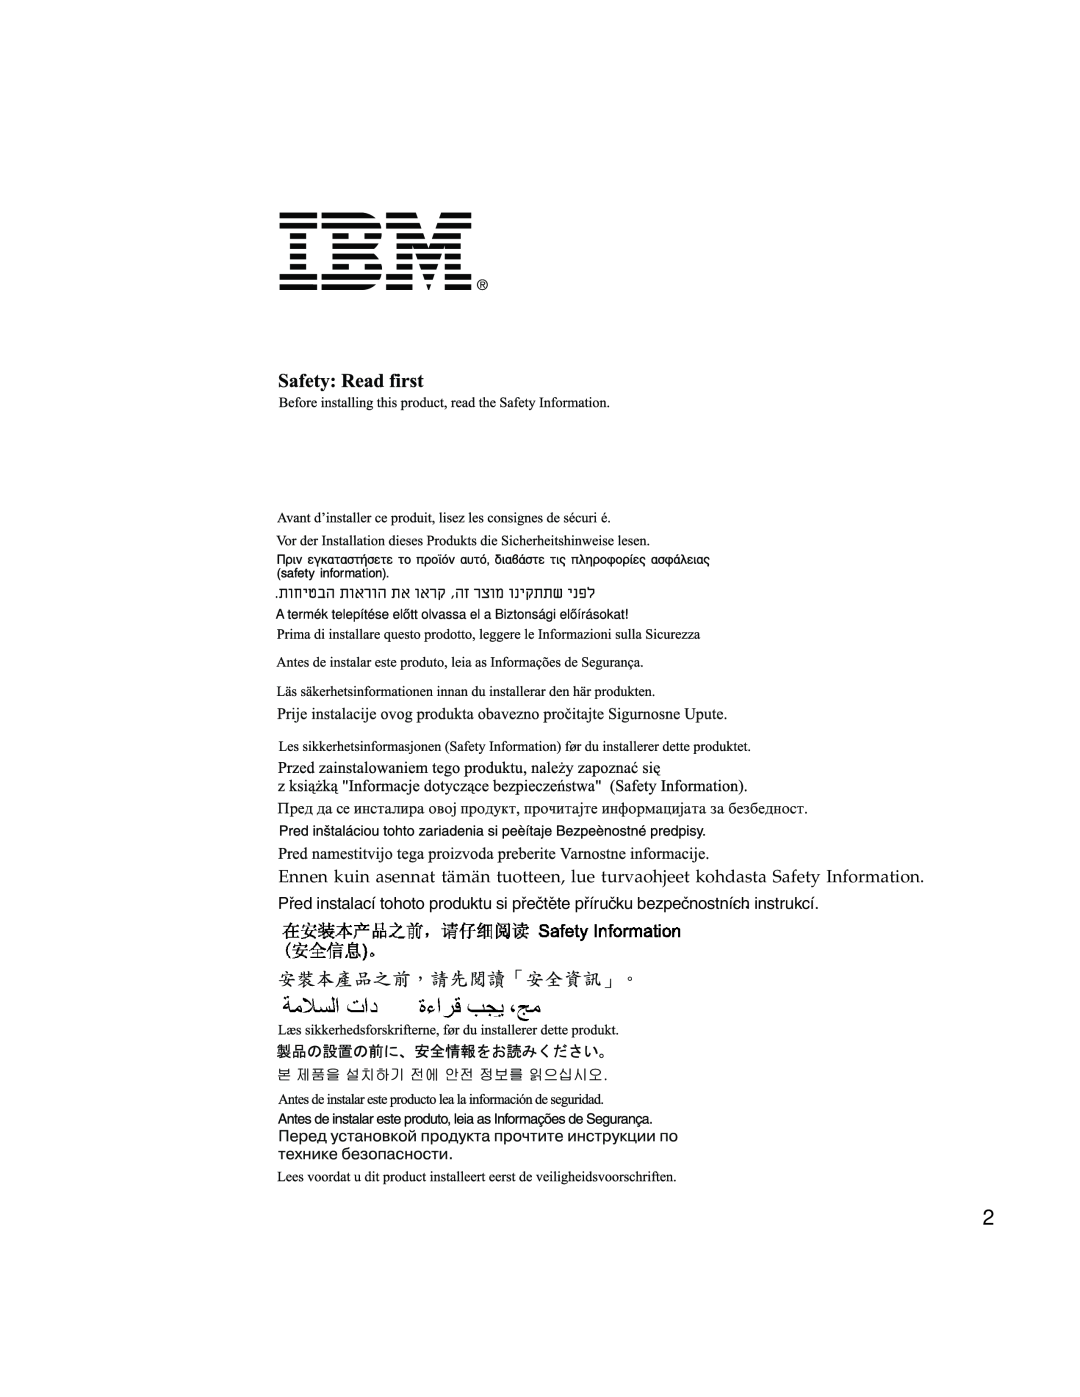 IBM T541A manual 